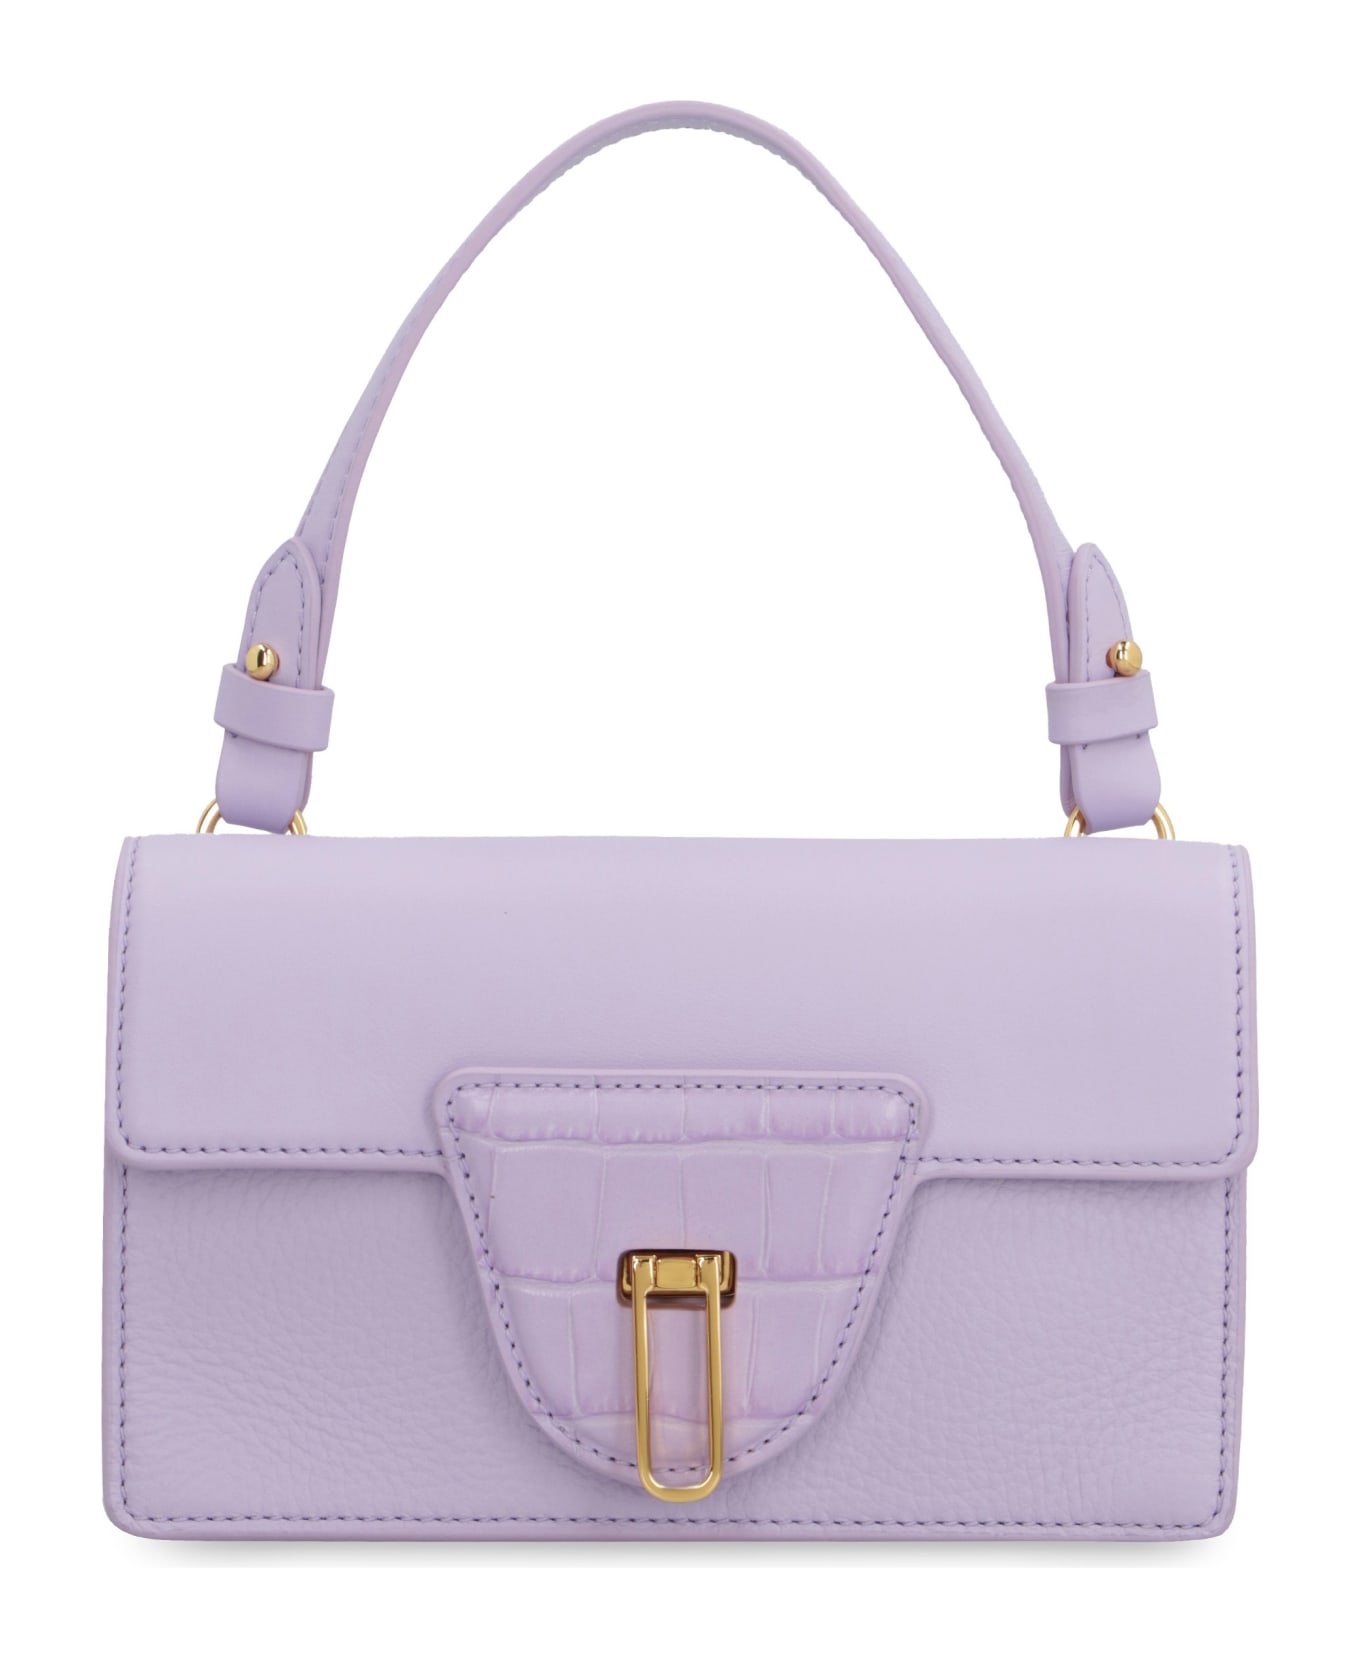 Coccinelle Nico Leather Handbag - Lilac